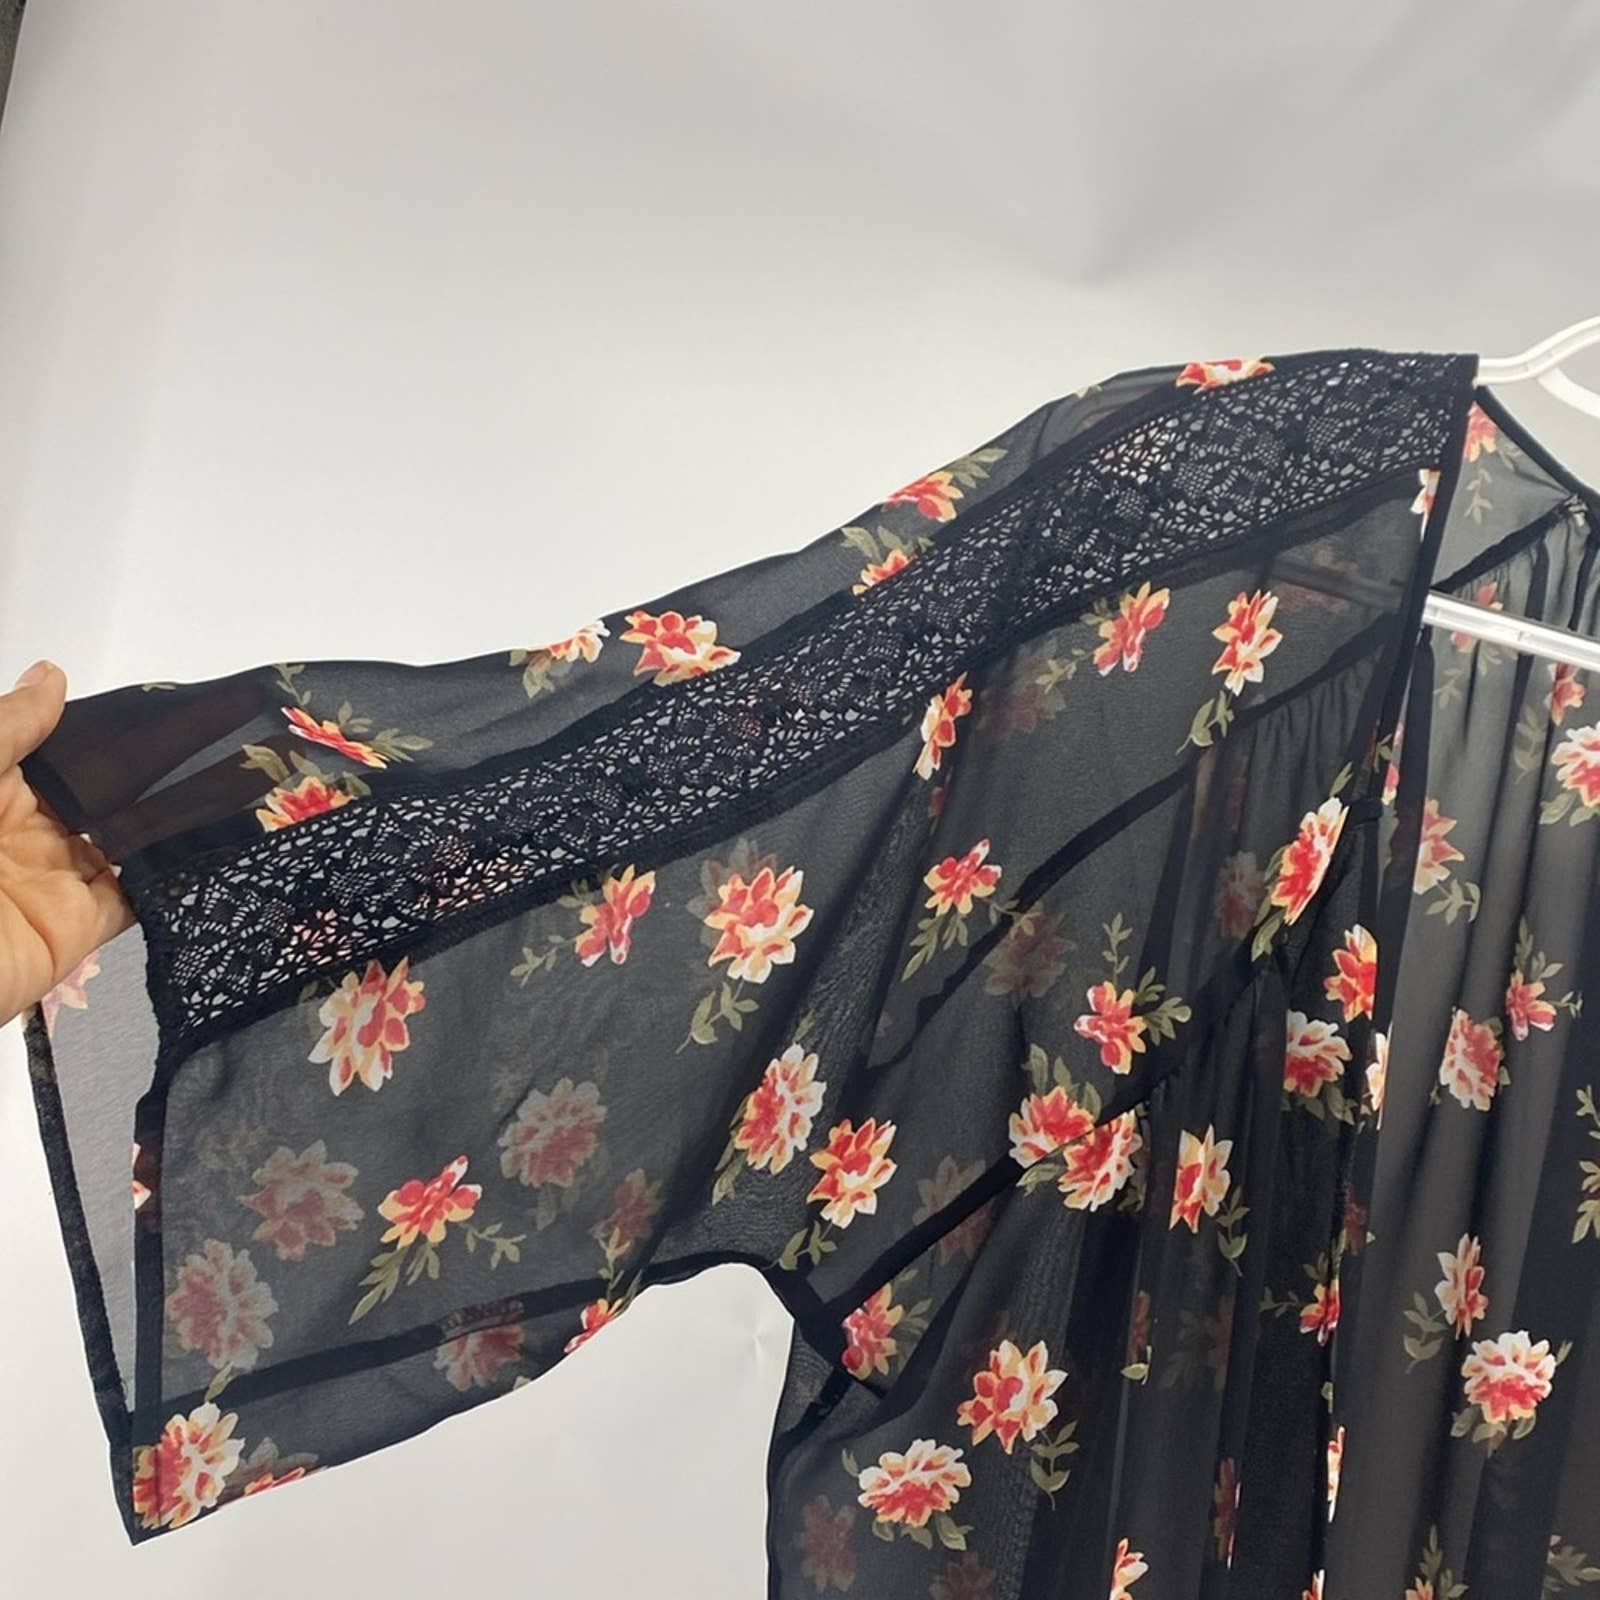 Express Express Floral kimono long line black pink bohemian witchy Size S / US 4 / IT 40 - 2 Preview